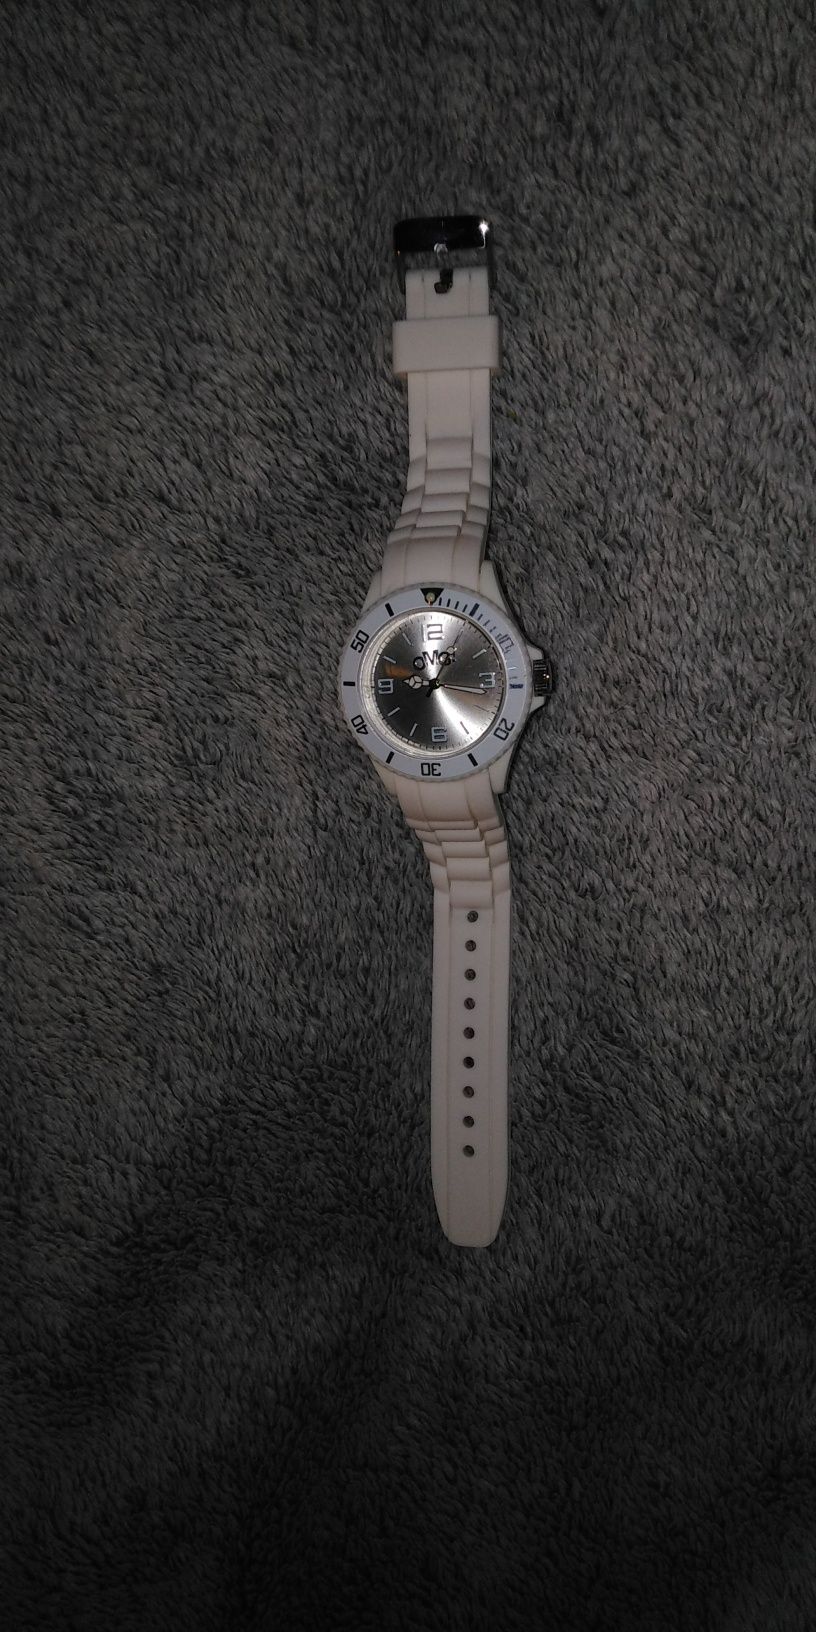 Biały zegarek damski